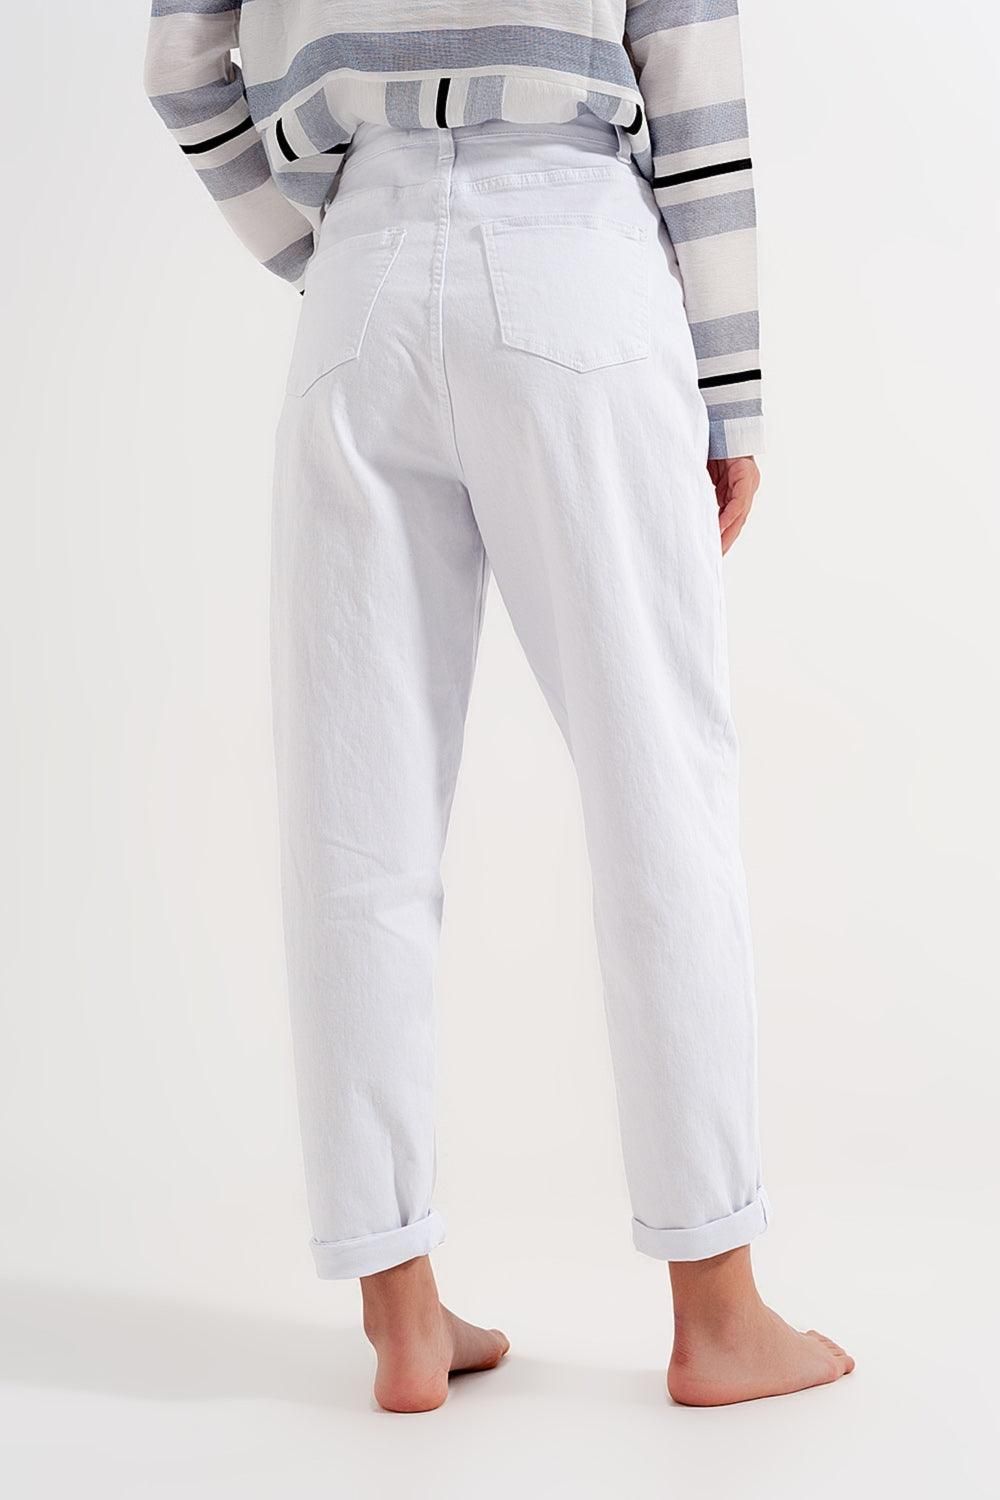 High Waist White Jeans - LK’s Boutique